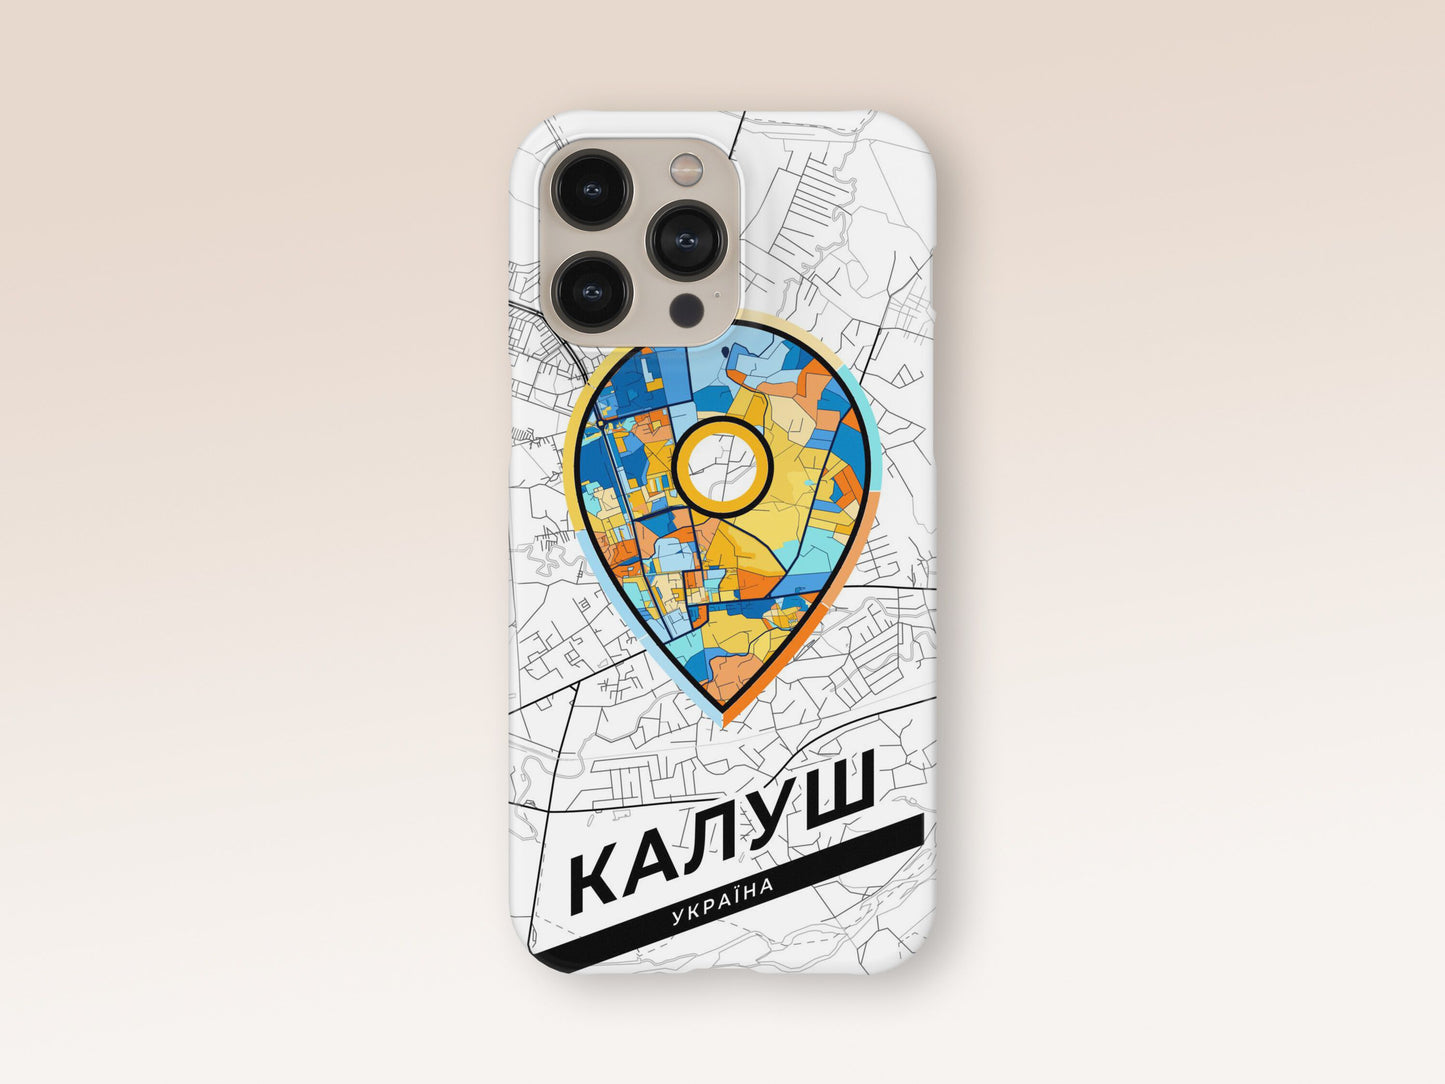 Kalush Ukraine slim phone case with colorful icon. Birthday, wedding or housewarming gift. Couple match cases. 1